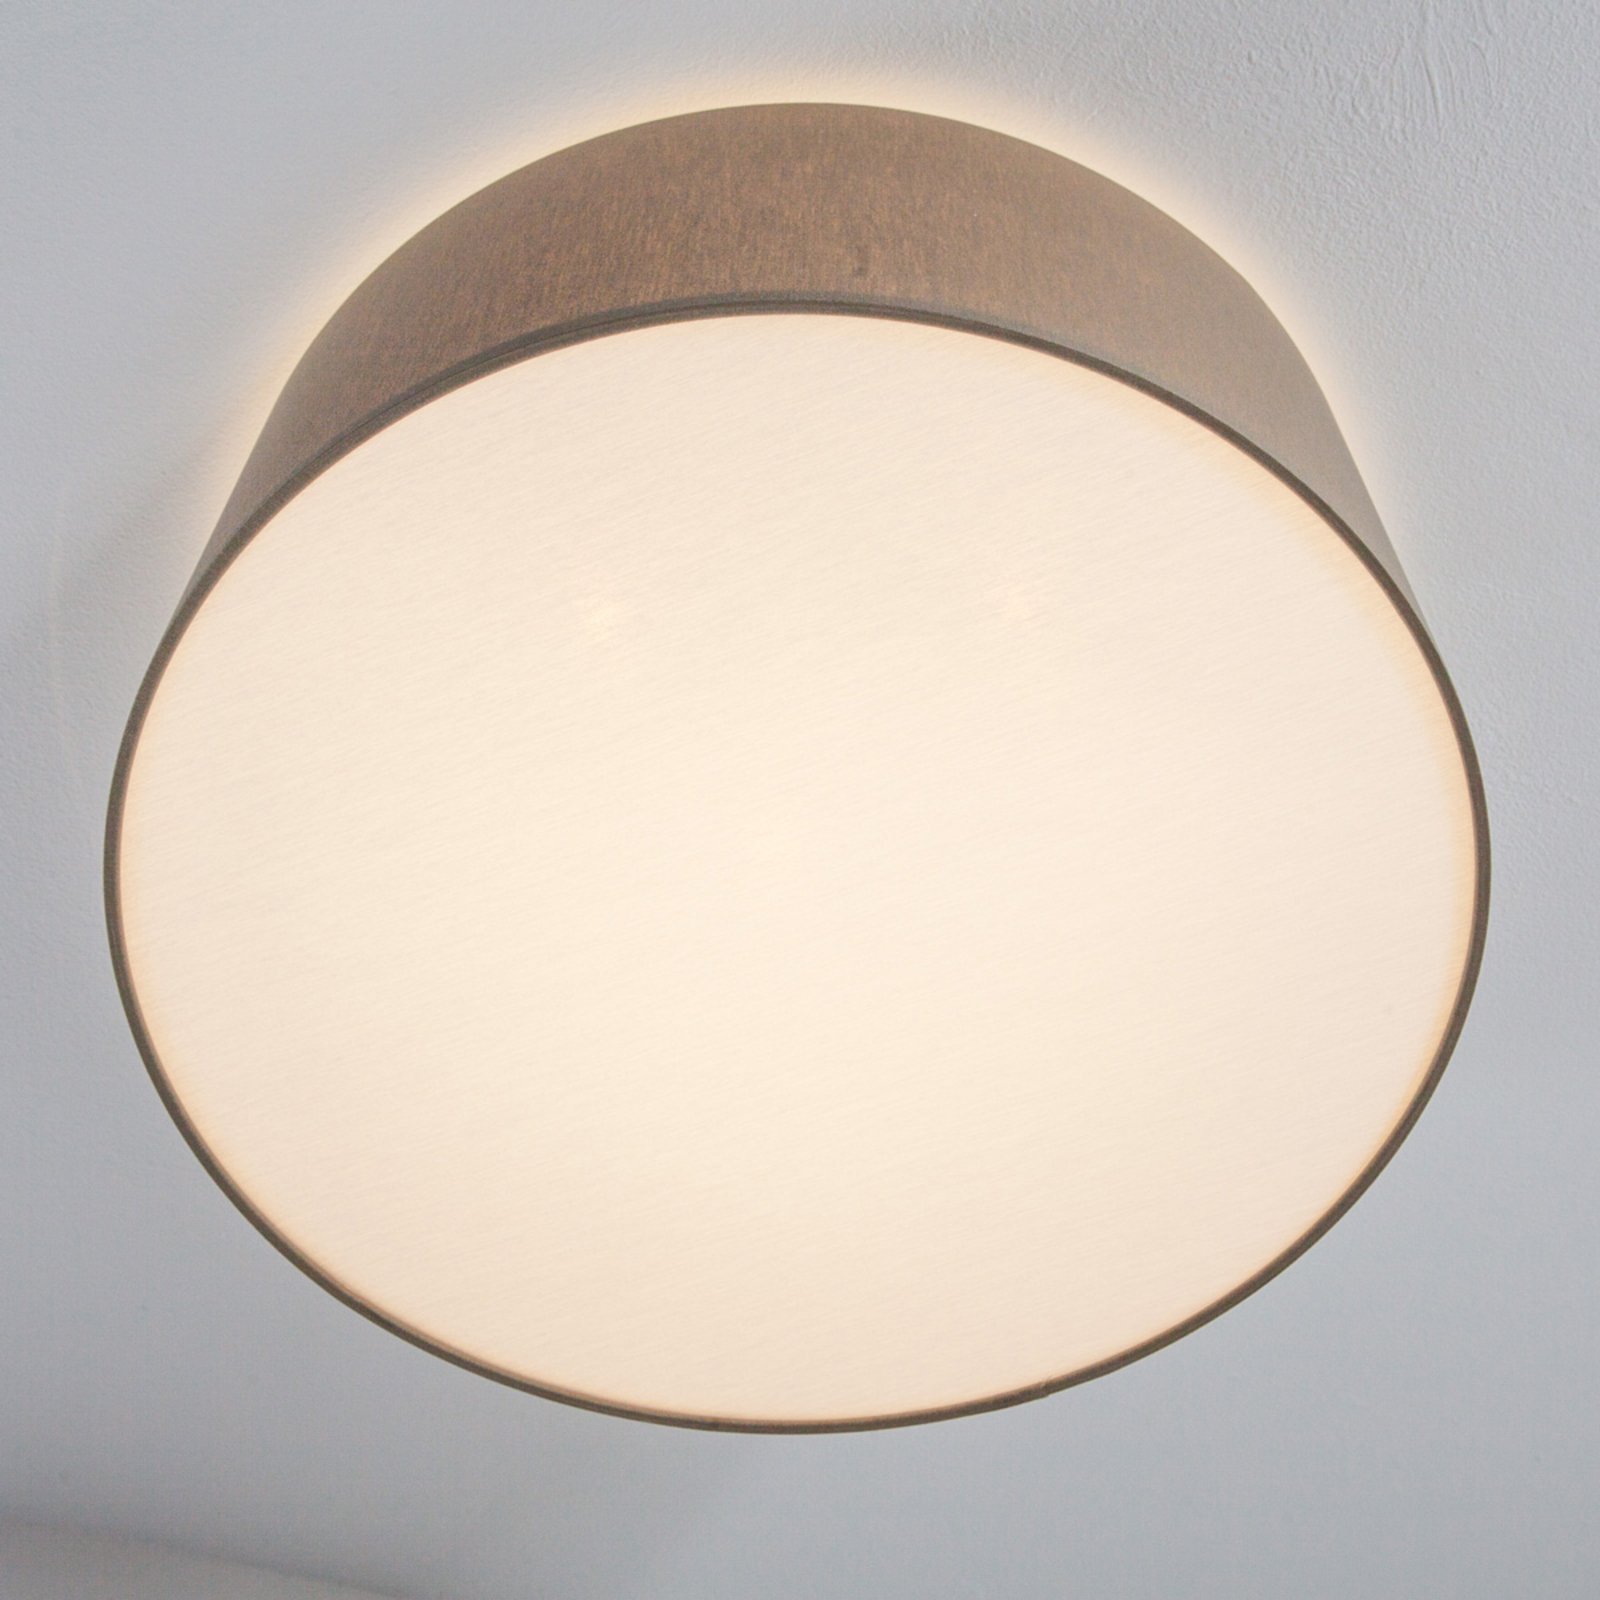 Grijsbruine plafondlamp Mara, 40 cm